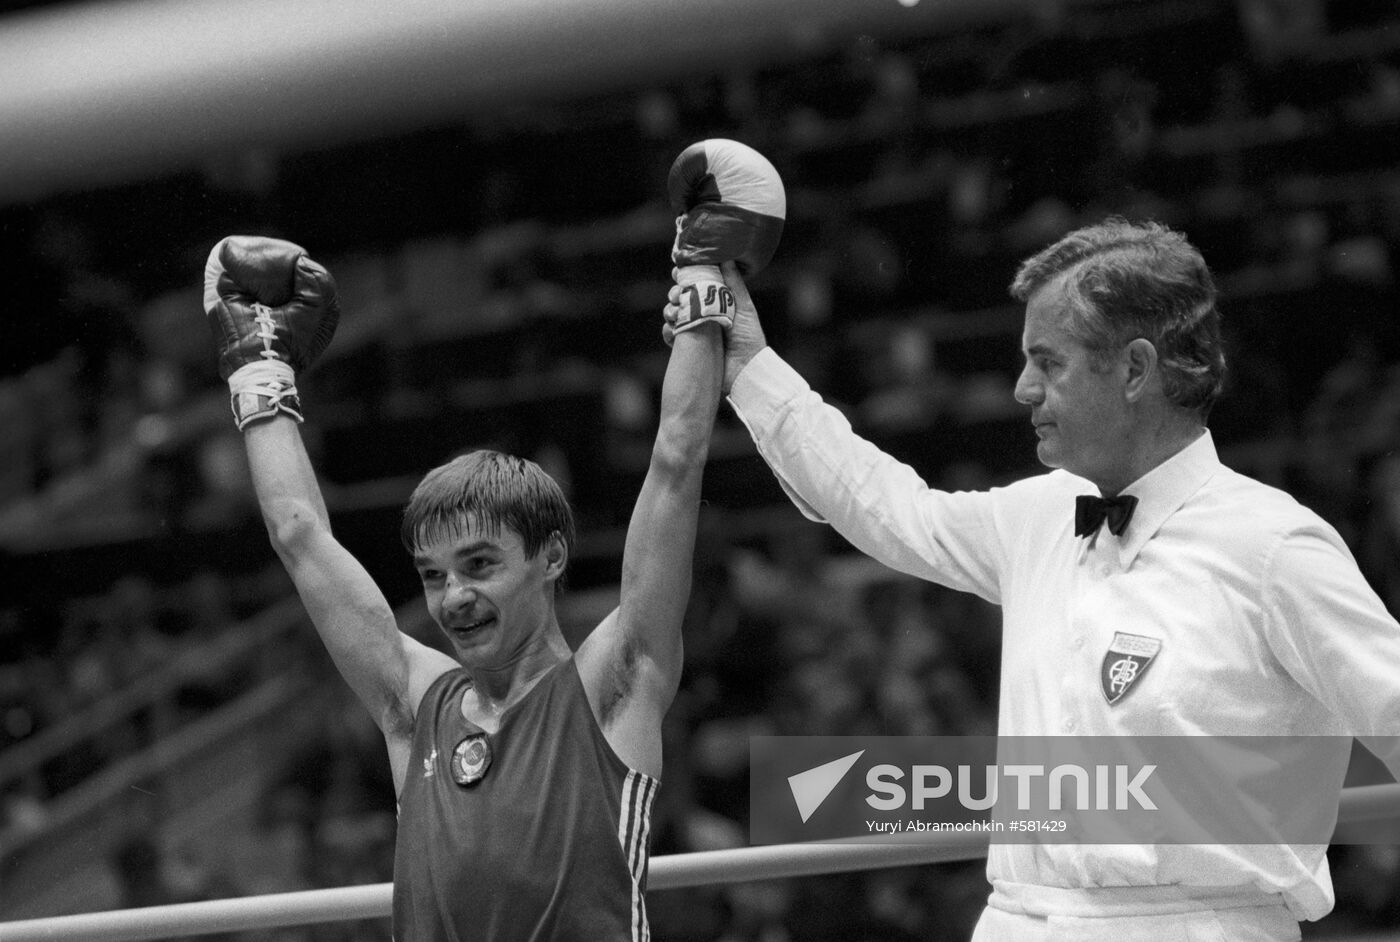 Boxer Viktor Miroshnichenko